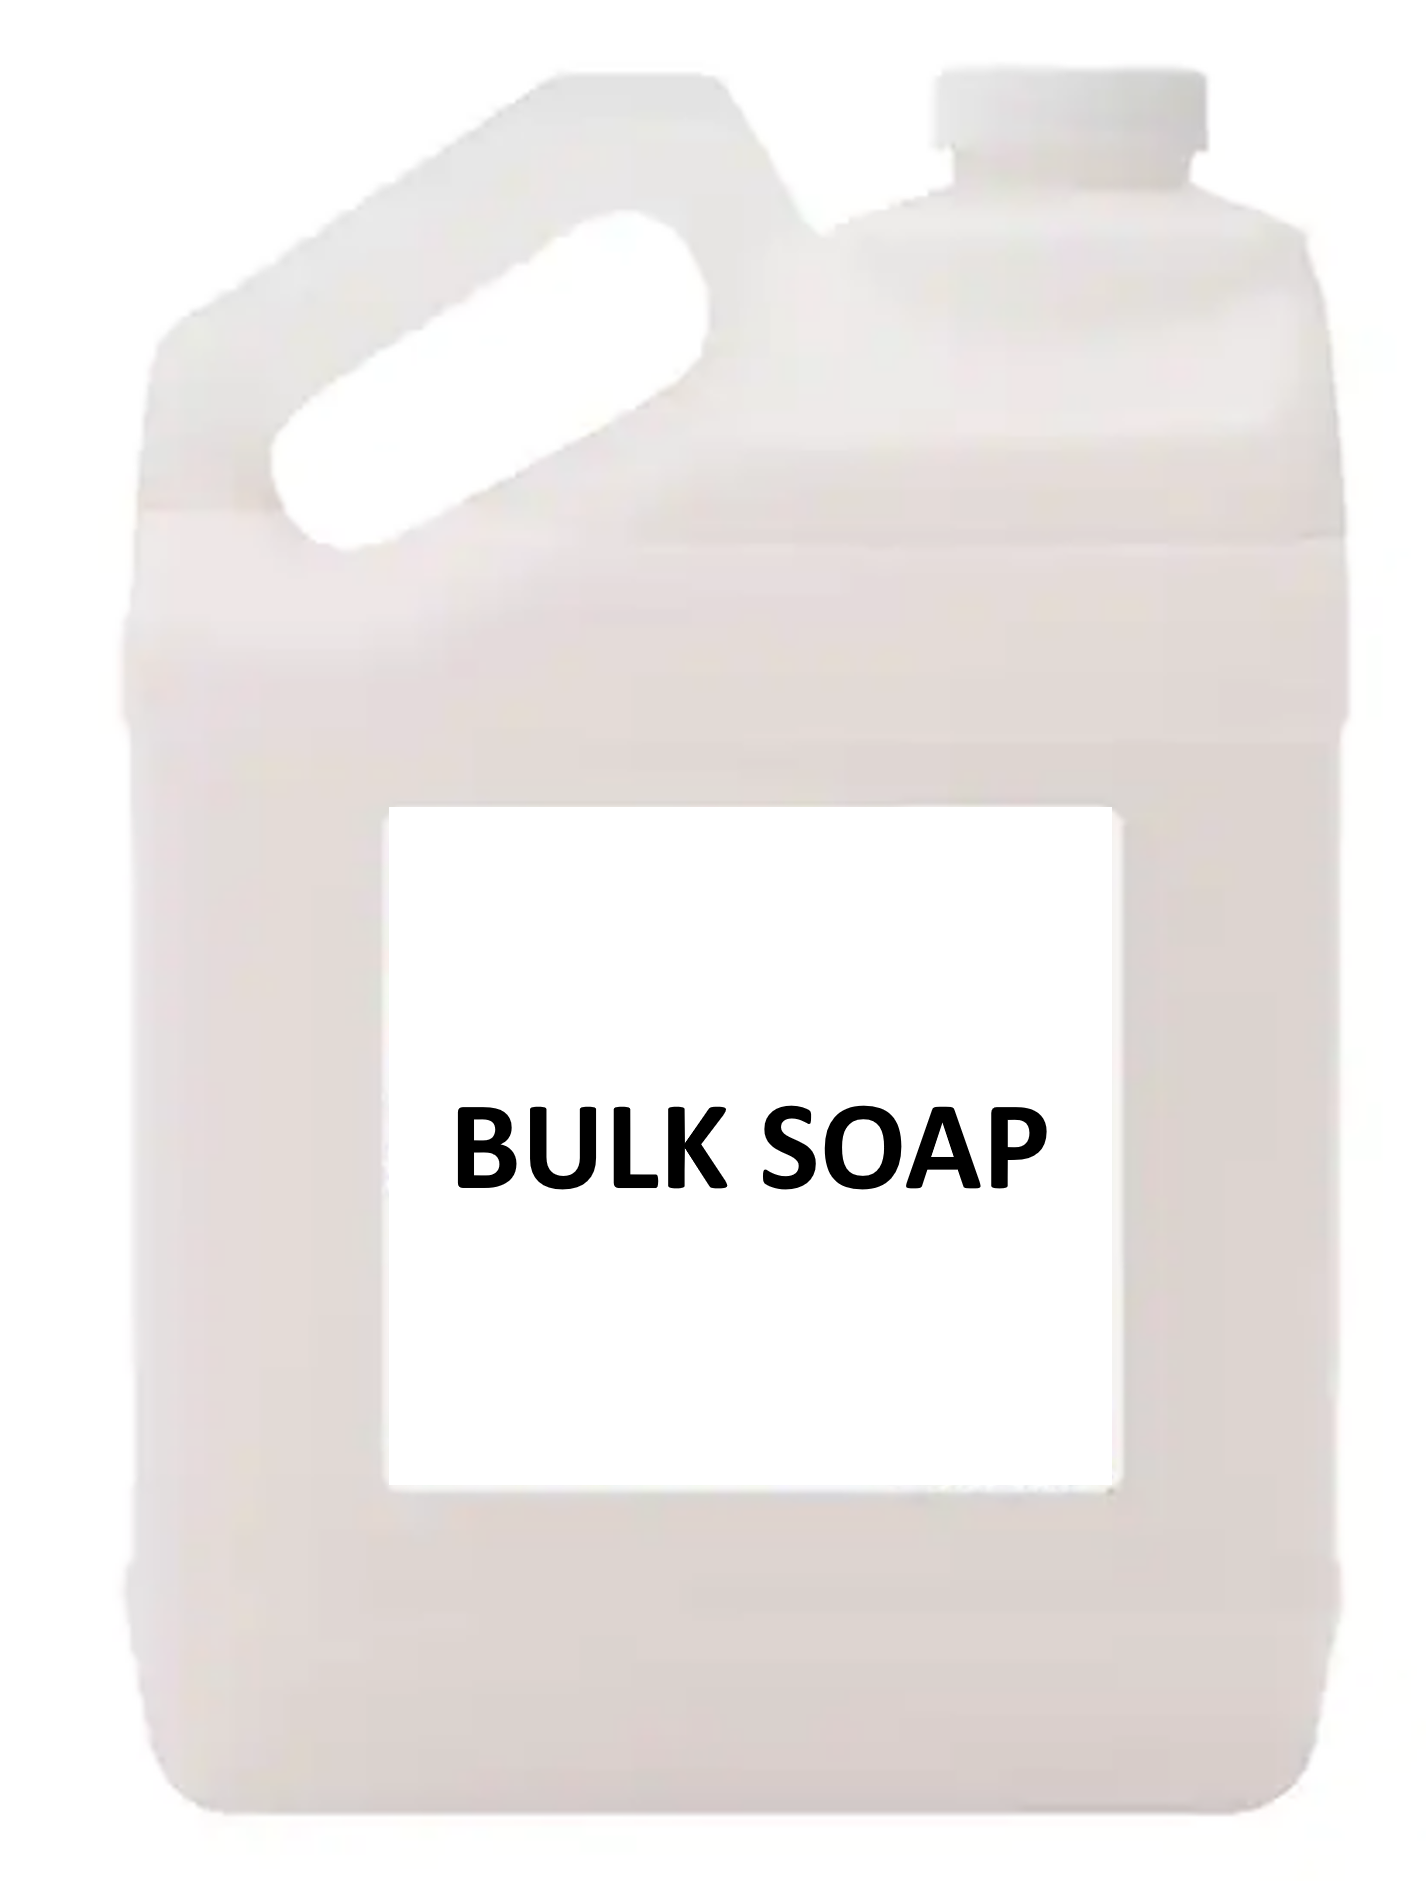 Bulk soap